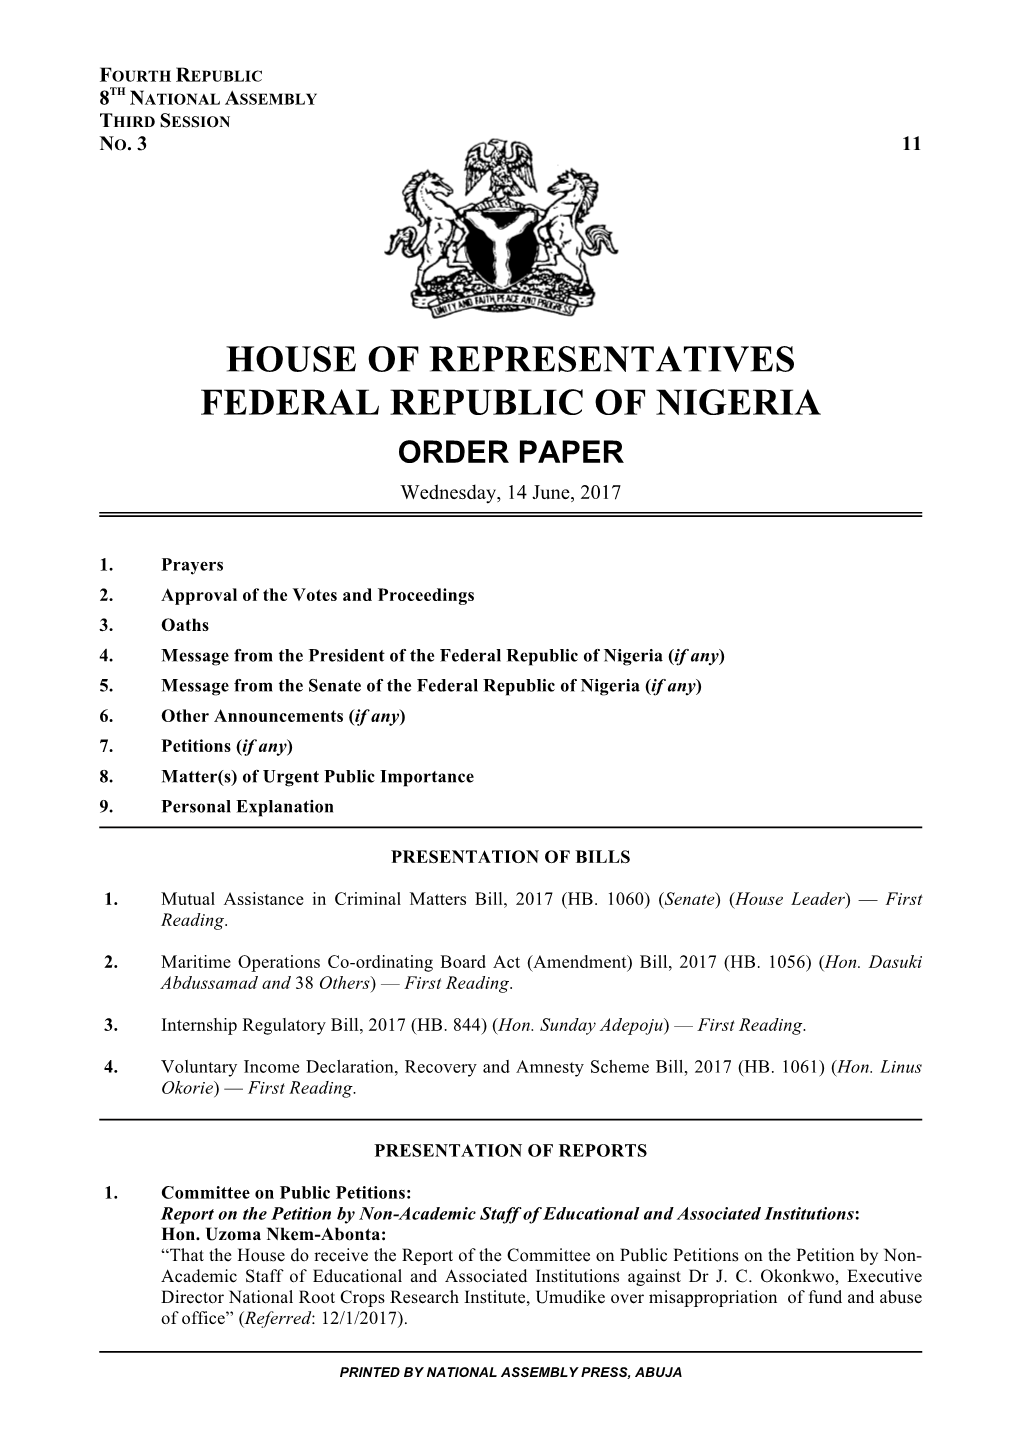 HOUSE of REPRESENTATIVES FEDERAL REPUBLIC of NIGERIA ORDER PAPER Wednesday, 14 June, 2017